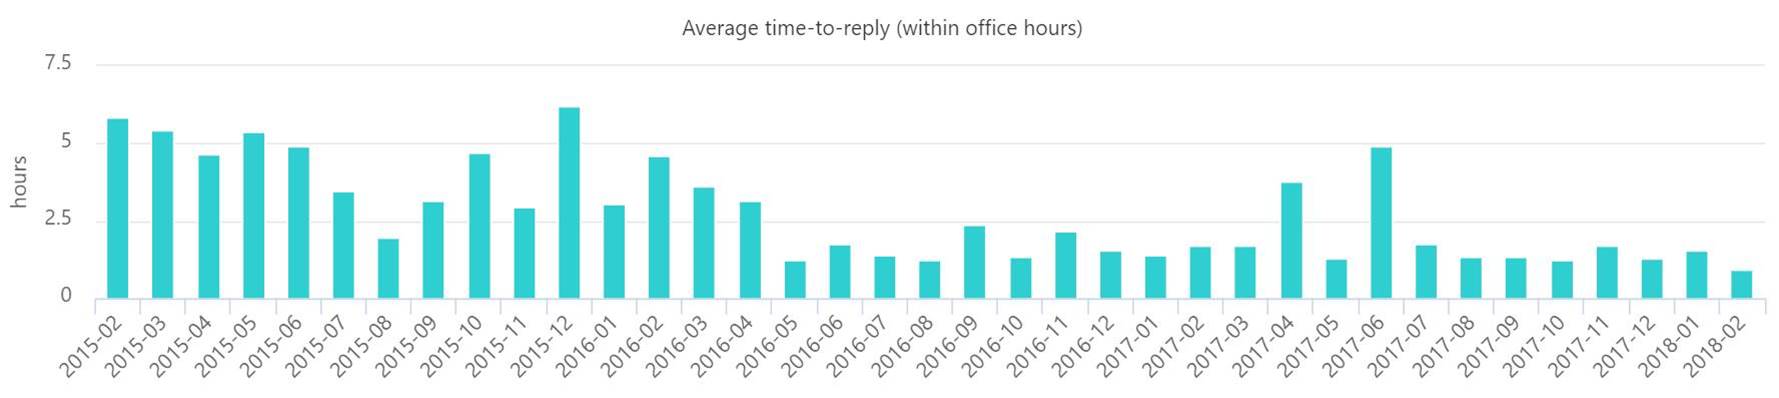 SuperOffice customer response times